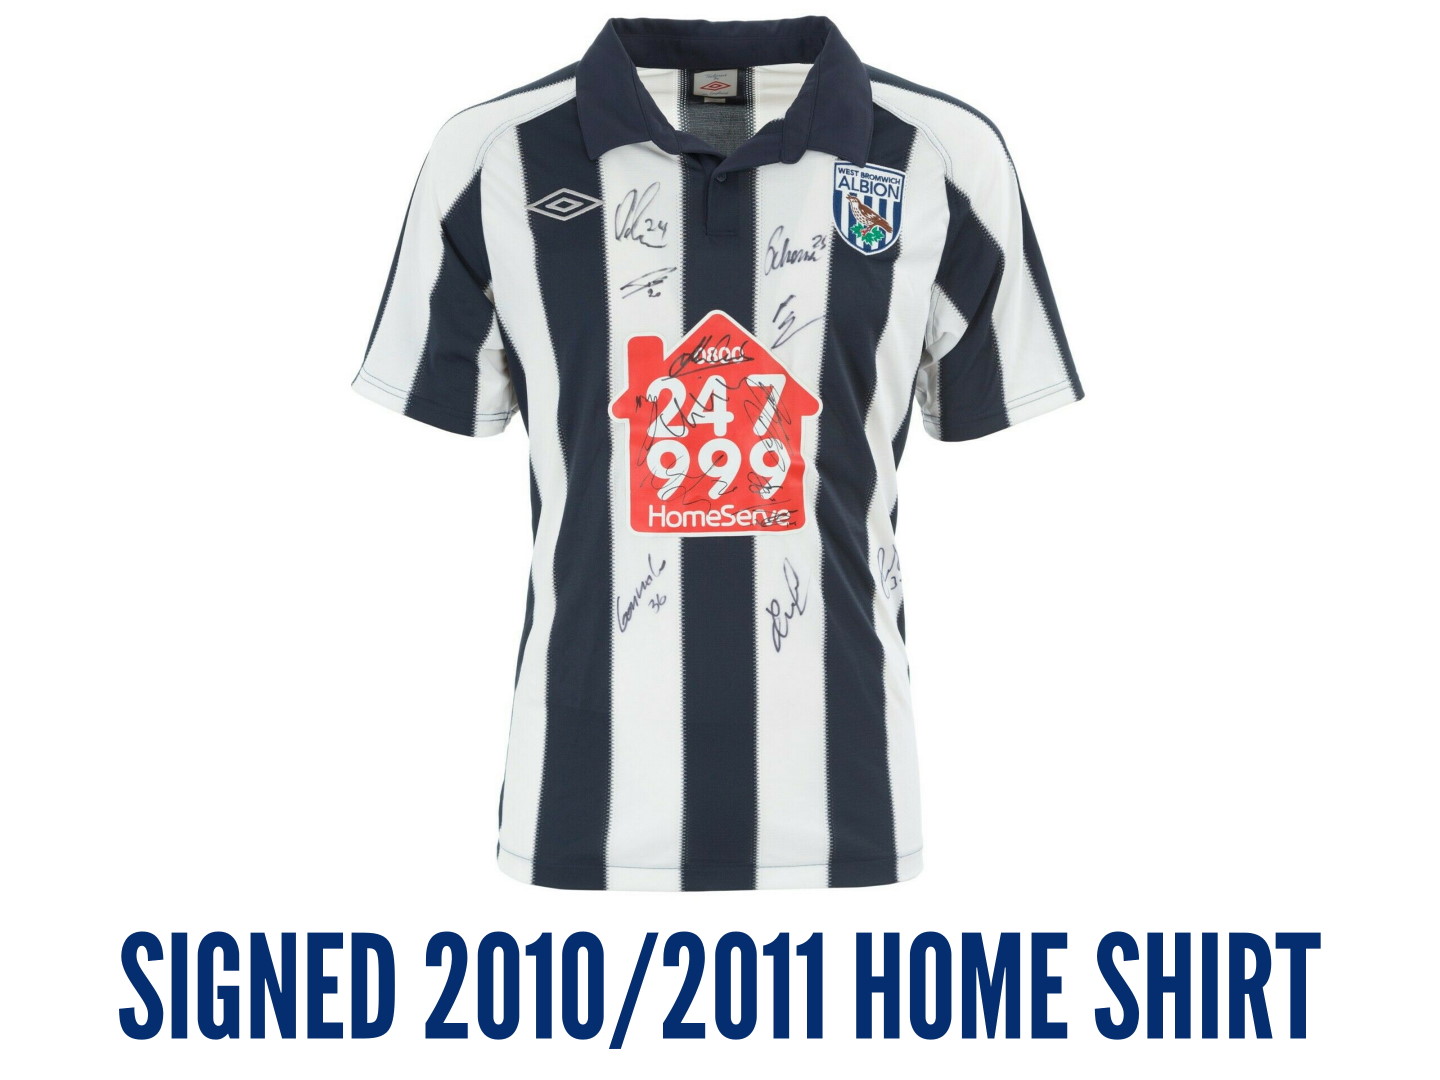 Signed 2010-2011 Home Shirt